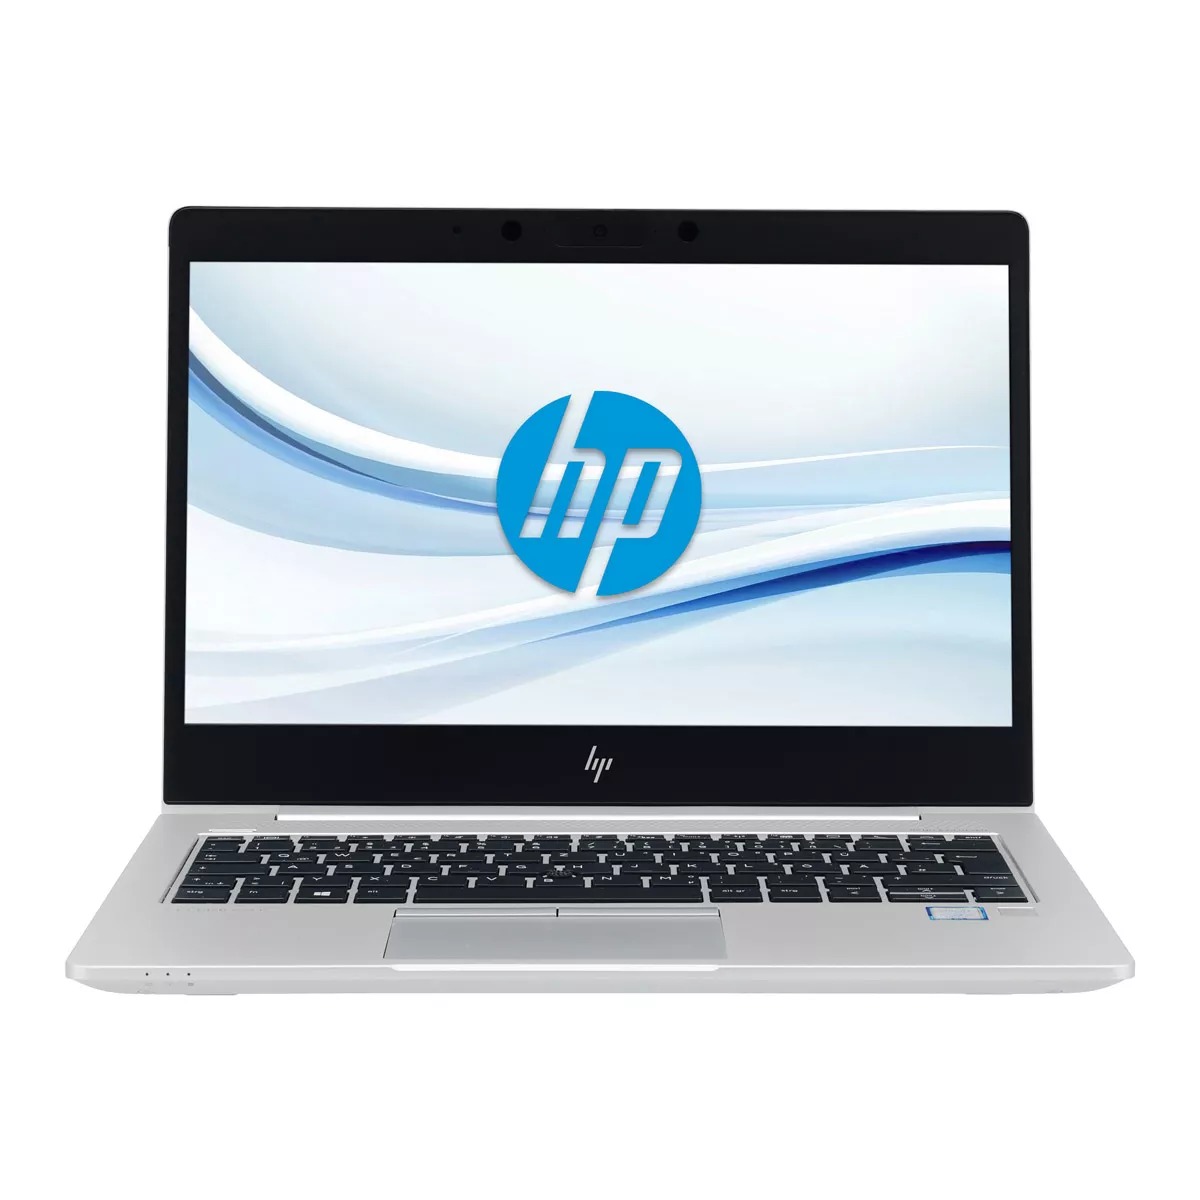 HP EliteBook 830 G5 Core i5 8250U Full-HD 240 GB M.2 SSD Webcam B